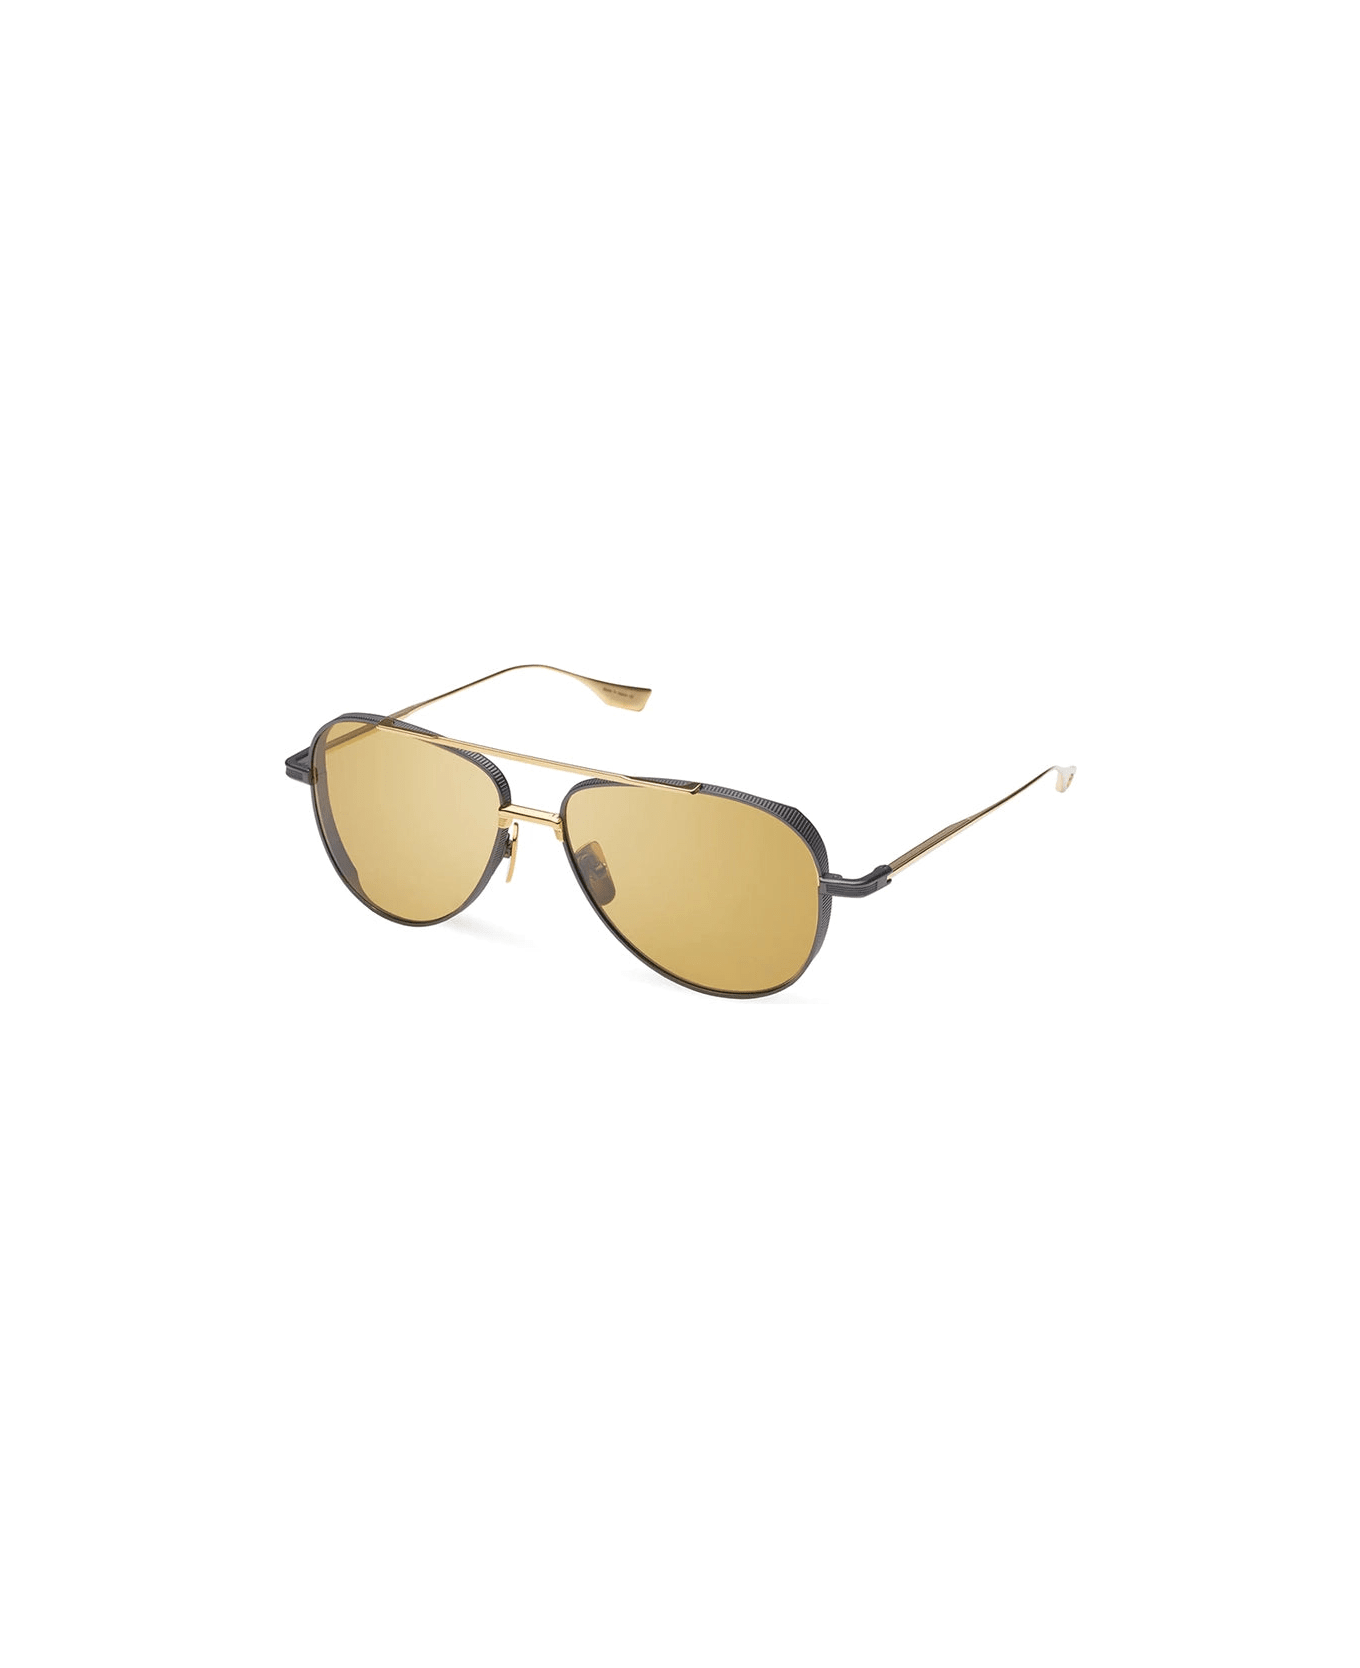 Dita Subsystem - Black Iron / Yellow Gold Sunglasses - black/yellow gold サングラス